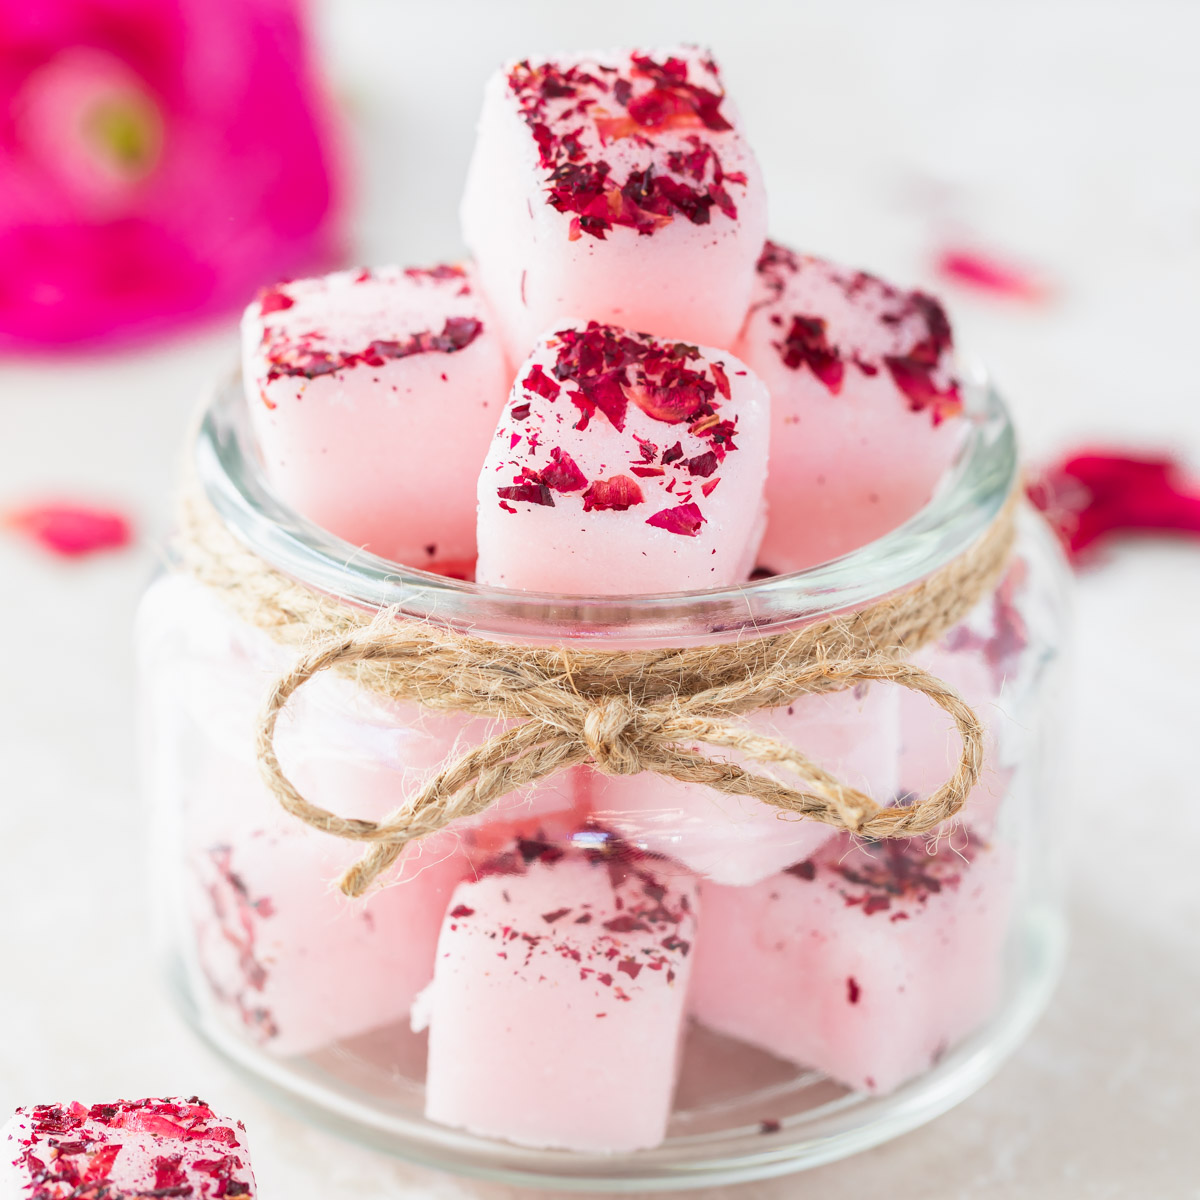 Homemade rose petal sugar scrub cubes